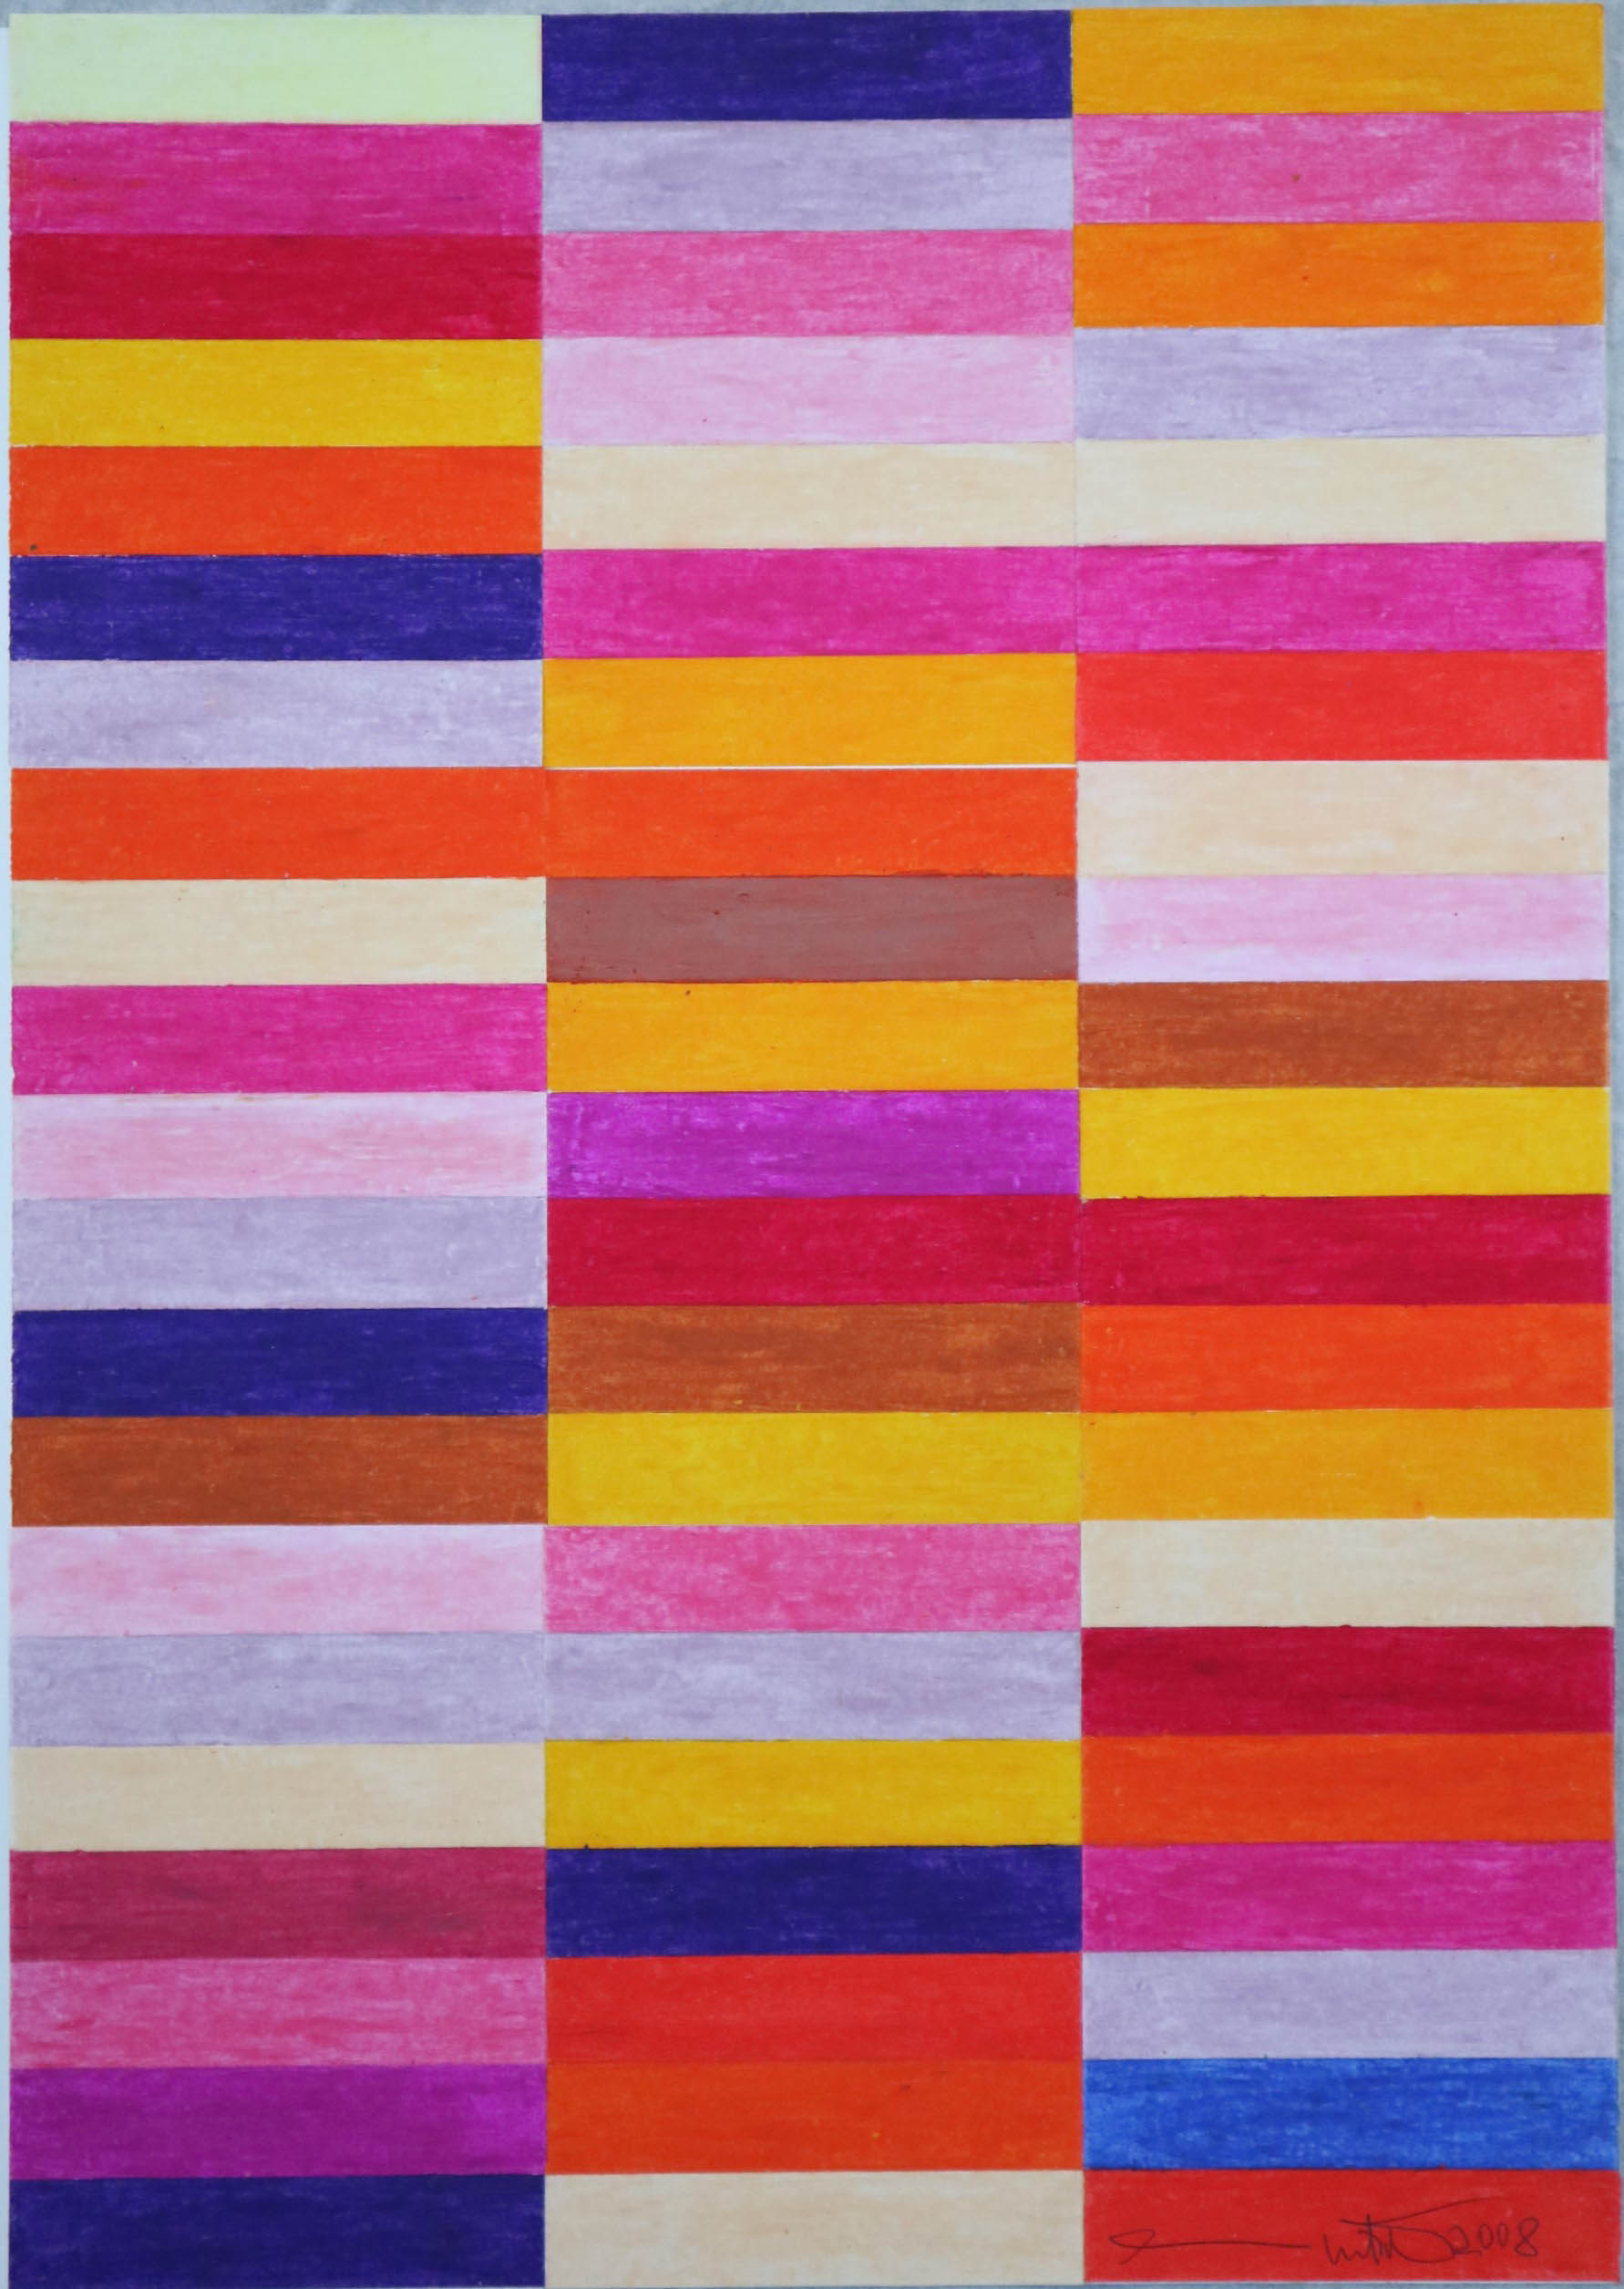 Teoria dei colori 13 (disegno) di Nitsch, Hermann - Fondazione Morra (sec. XXI)